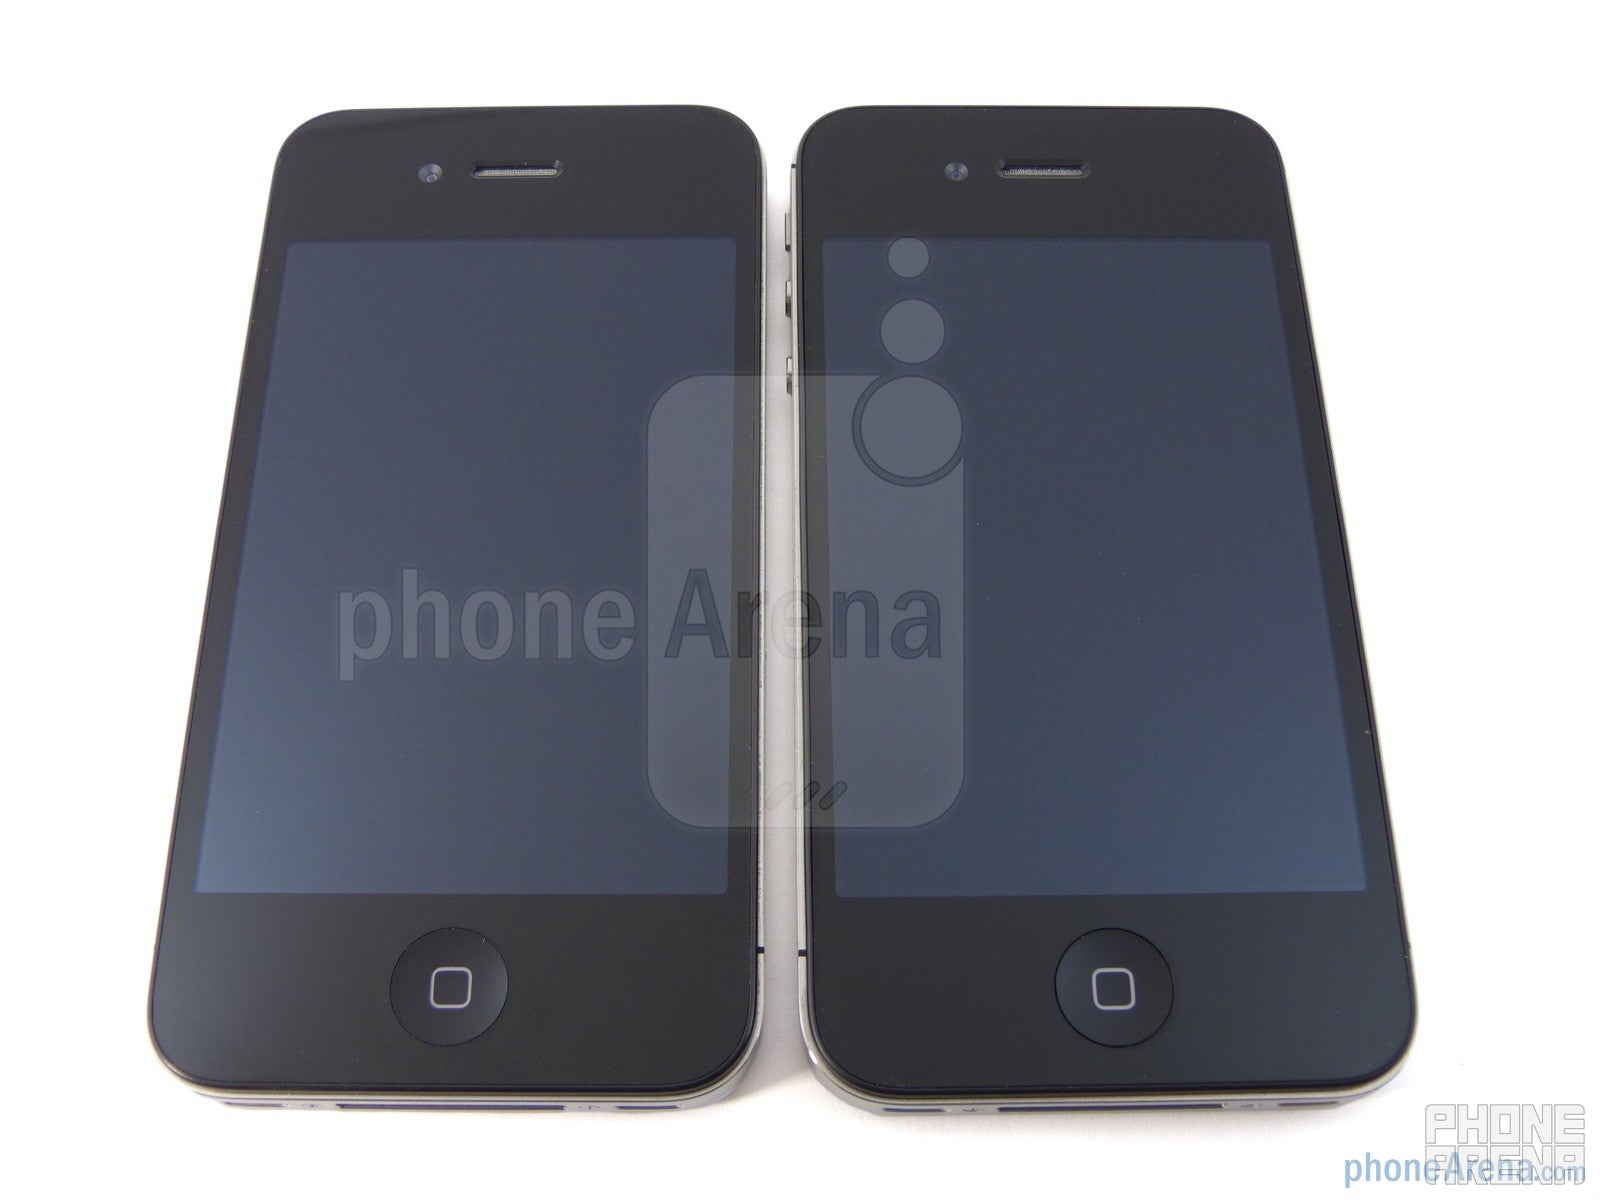 Verizon iPhone 4 vs AT&amp;T iPhone 4